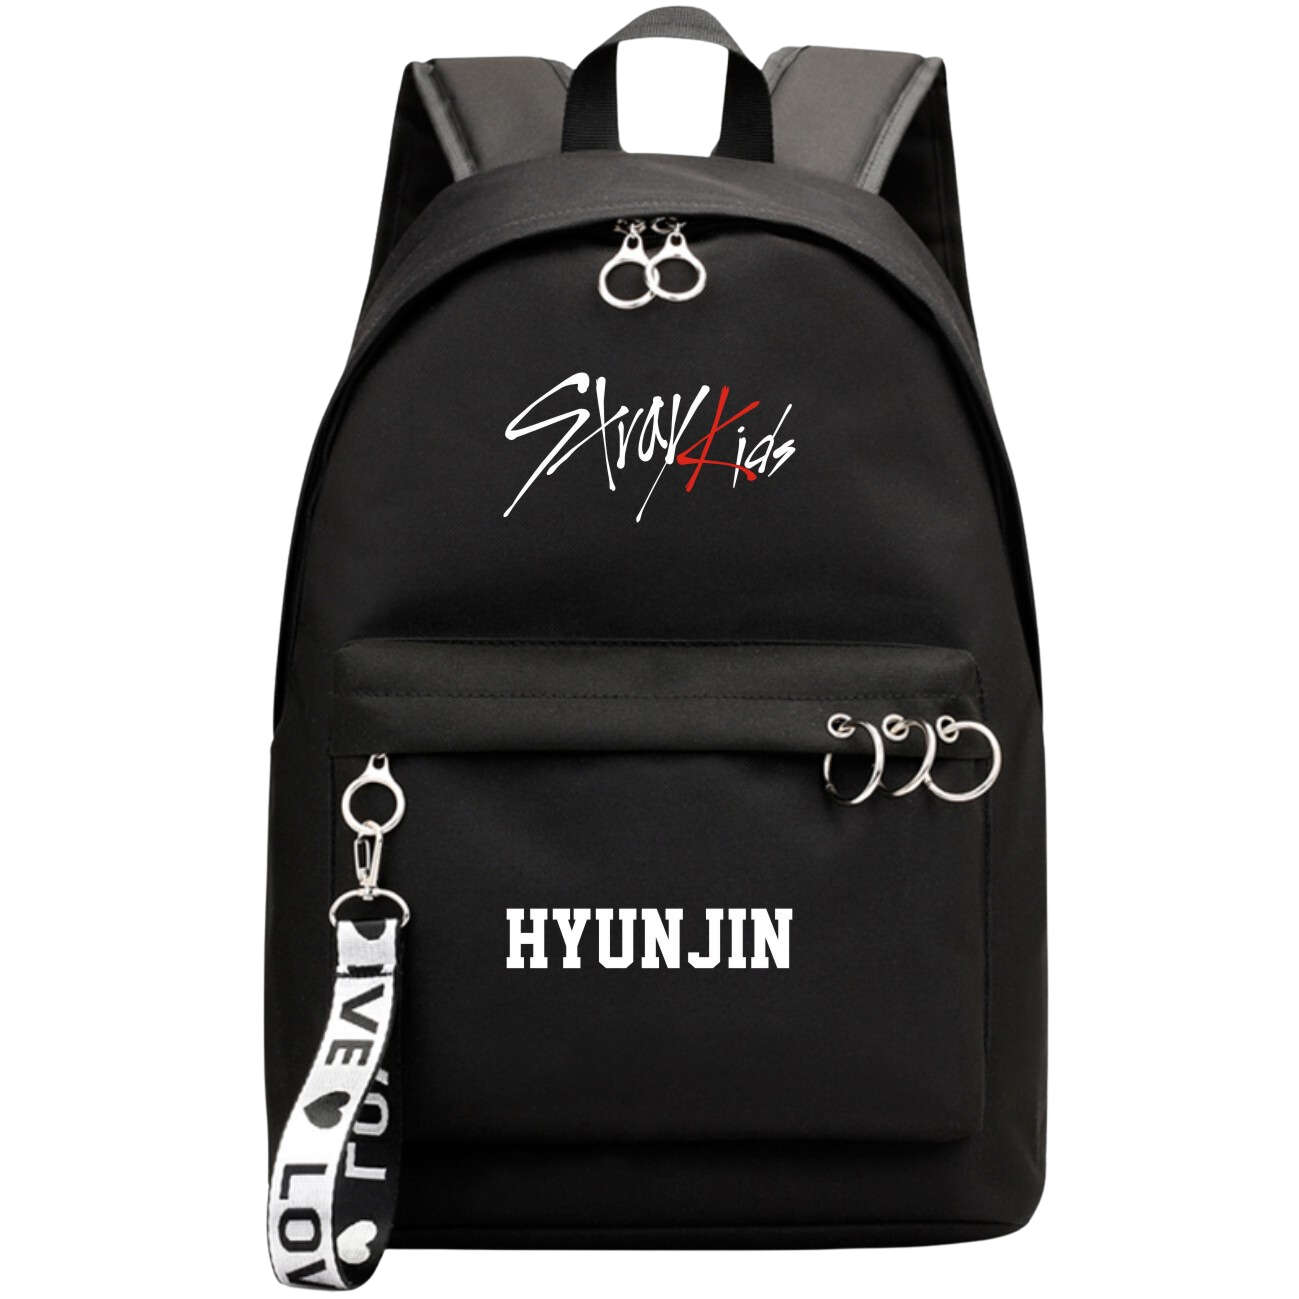 STRAY KIDS Hyunjin School Bag Back to Schoolbackpack Bag 